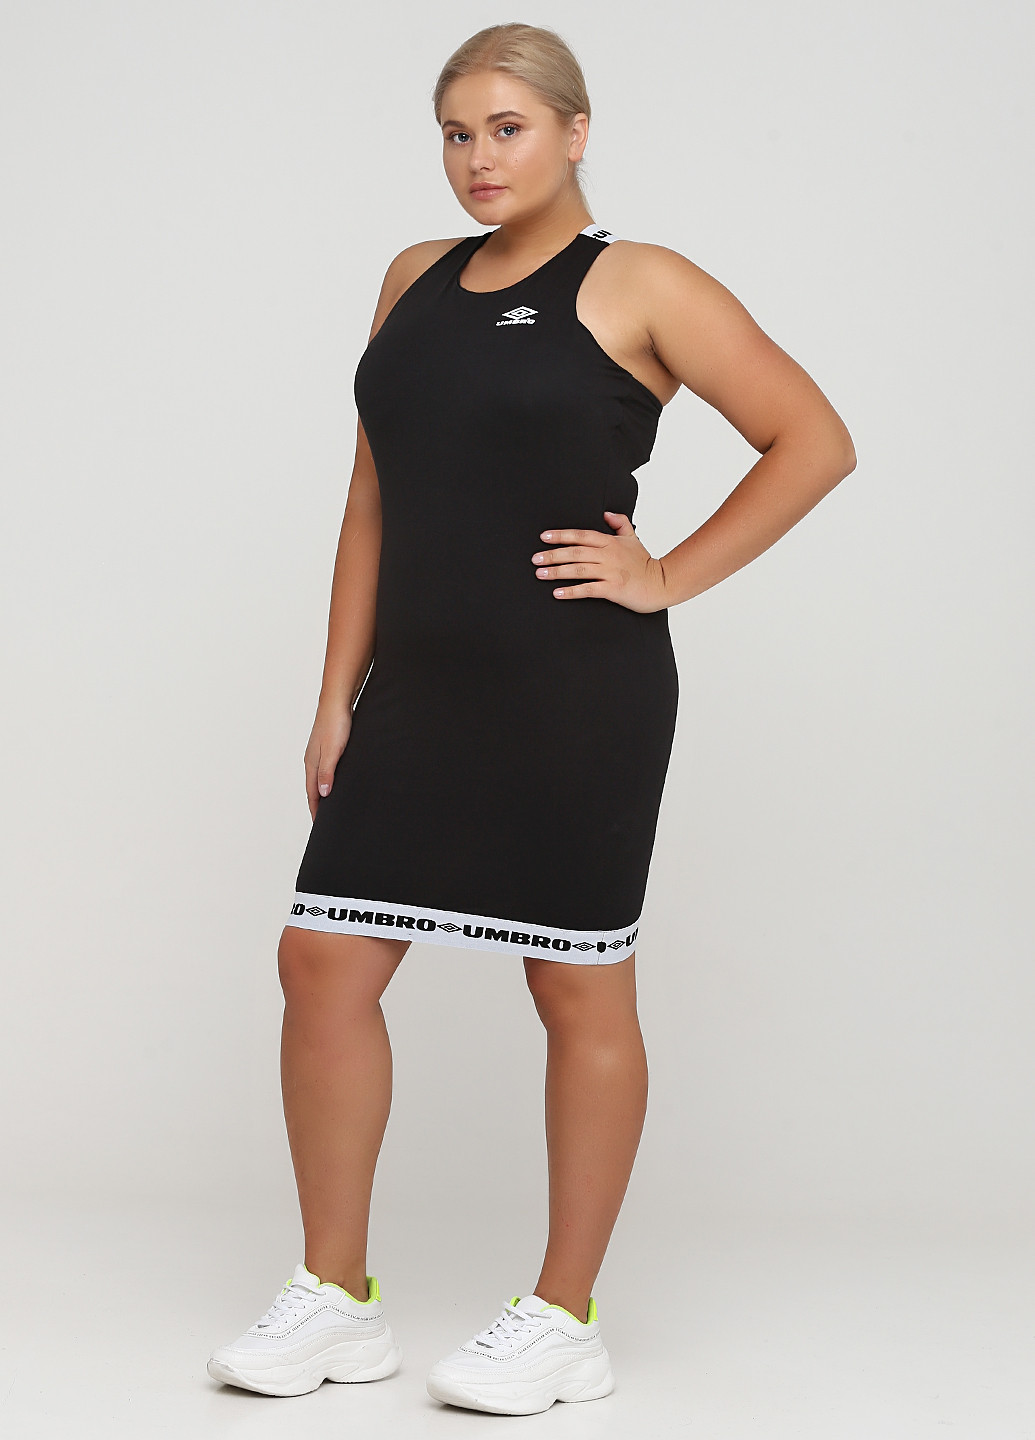 Чорна спортивна сукня сукня-майка Umbro з логотипом